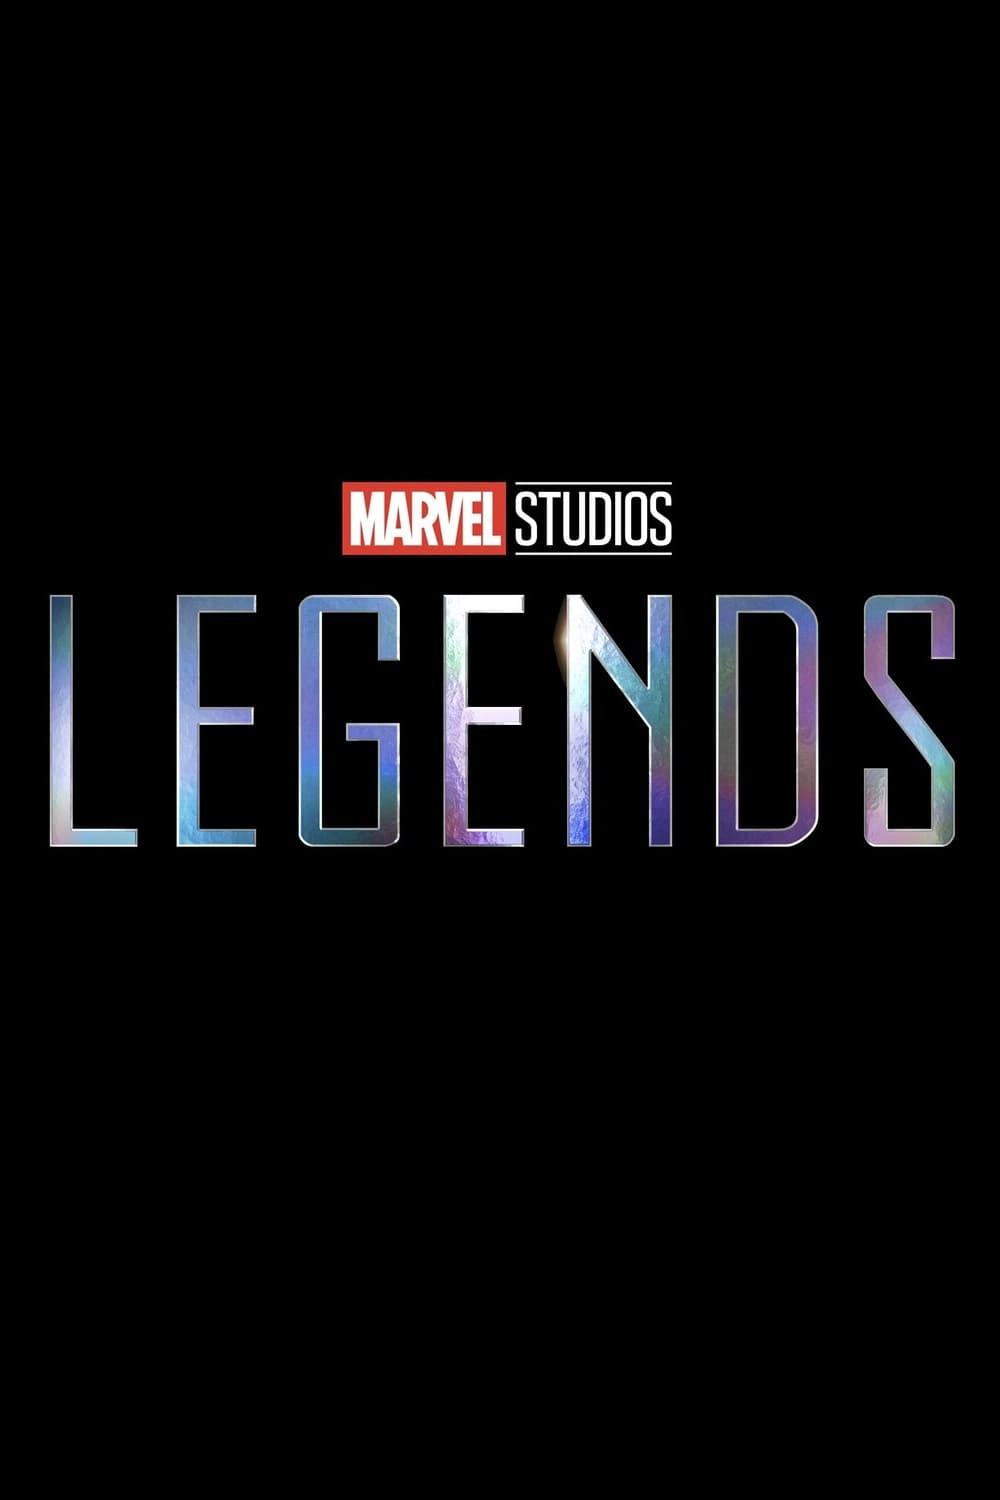 Marvel Studios Legends poster